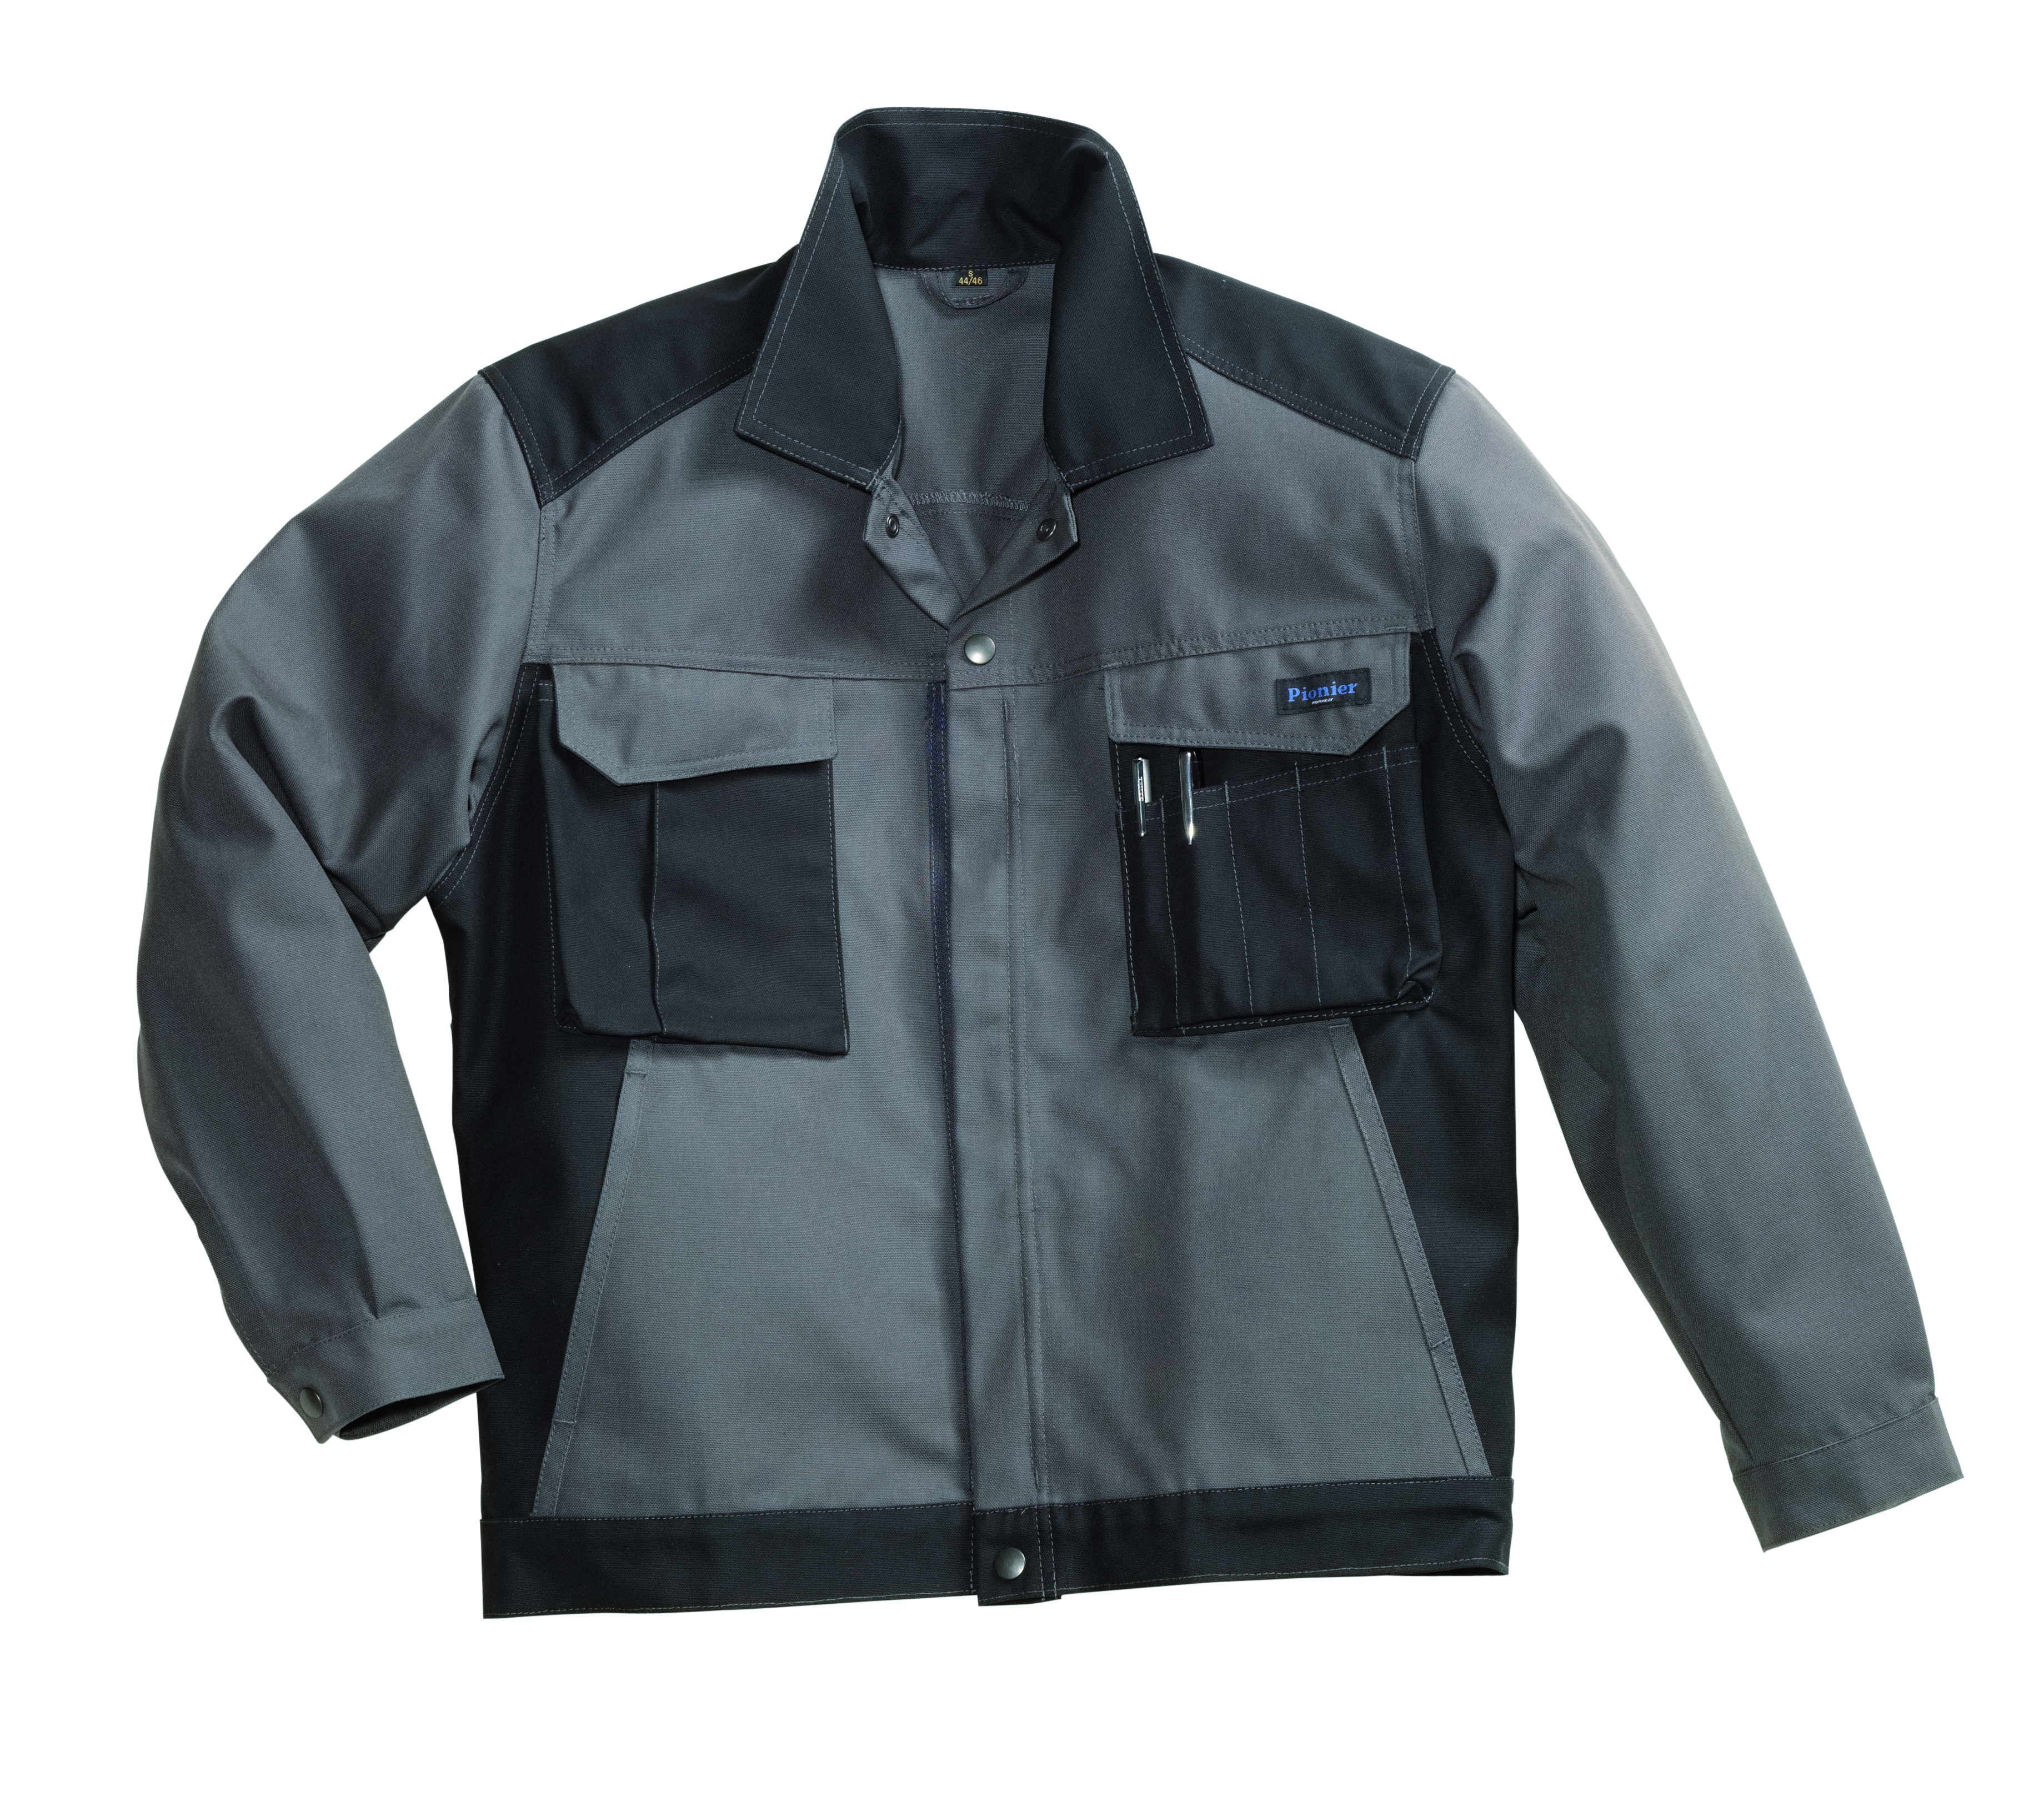 PIONIER Blousonjacke Arbeitsjacke Berufsjacke Schutzjacke Arbeitskleidung Berufskleidung CANVAS BLACKLINE grau schwarz ca 310g